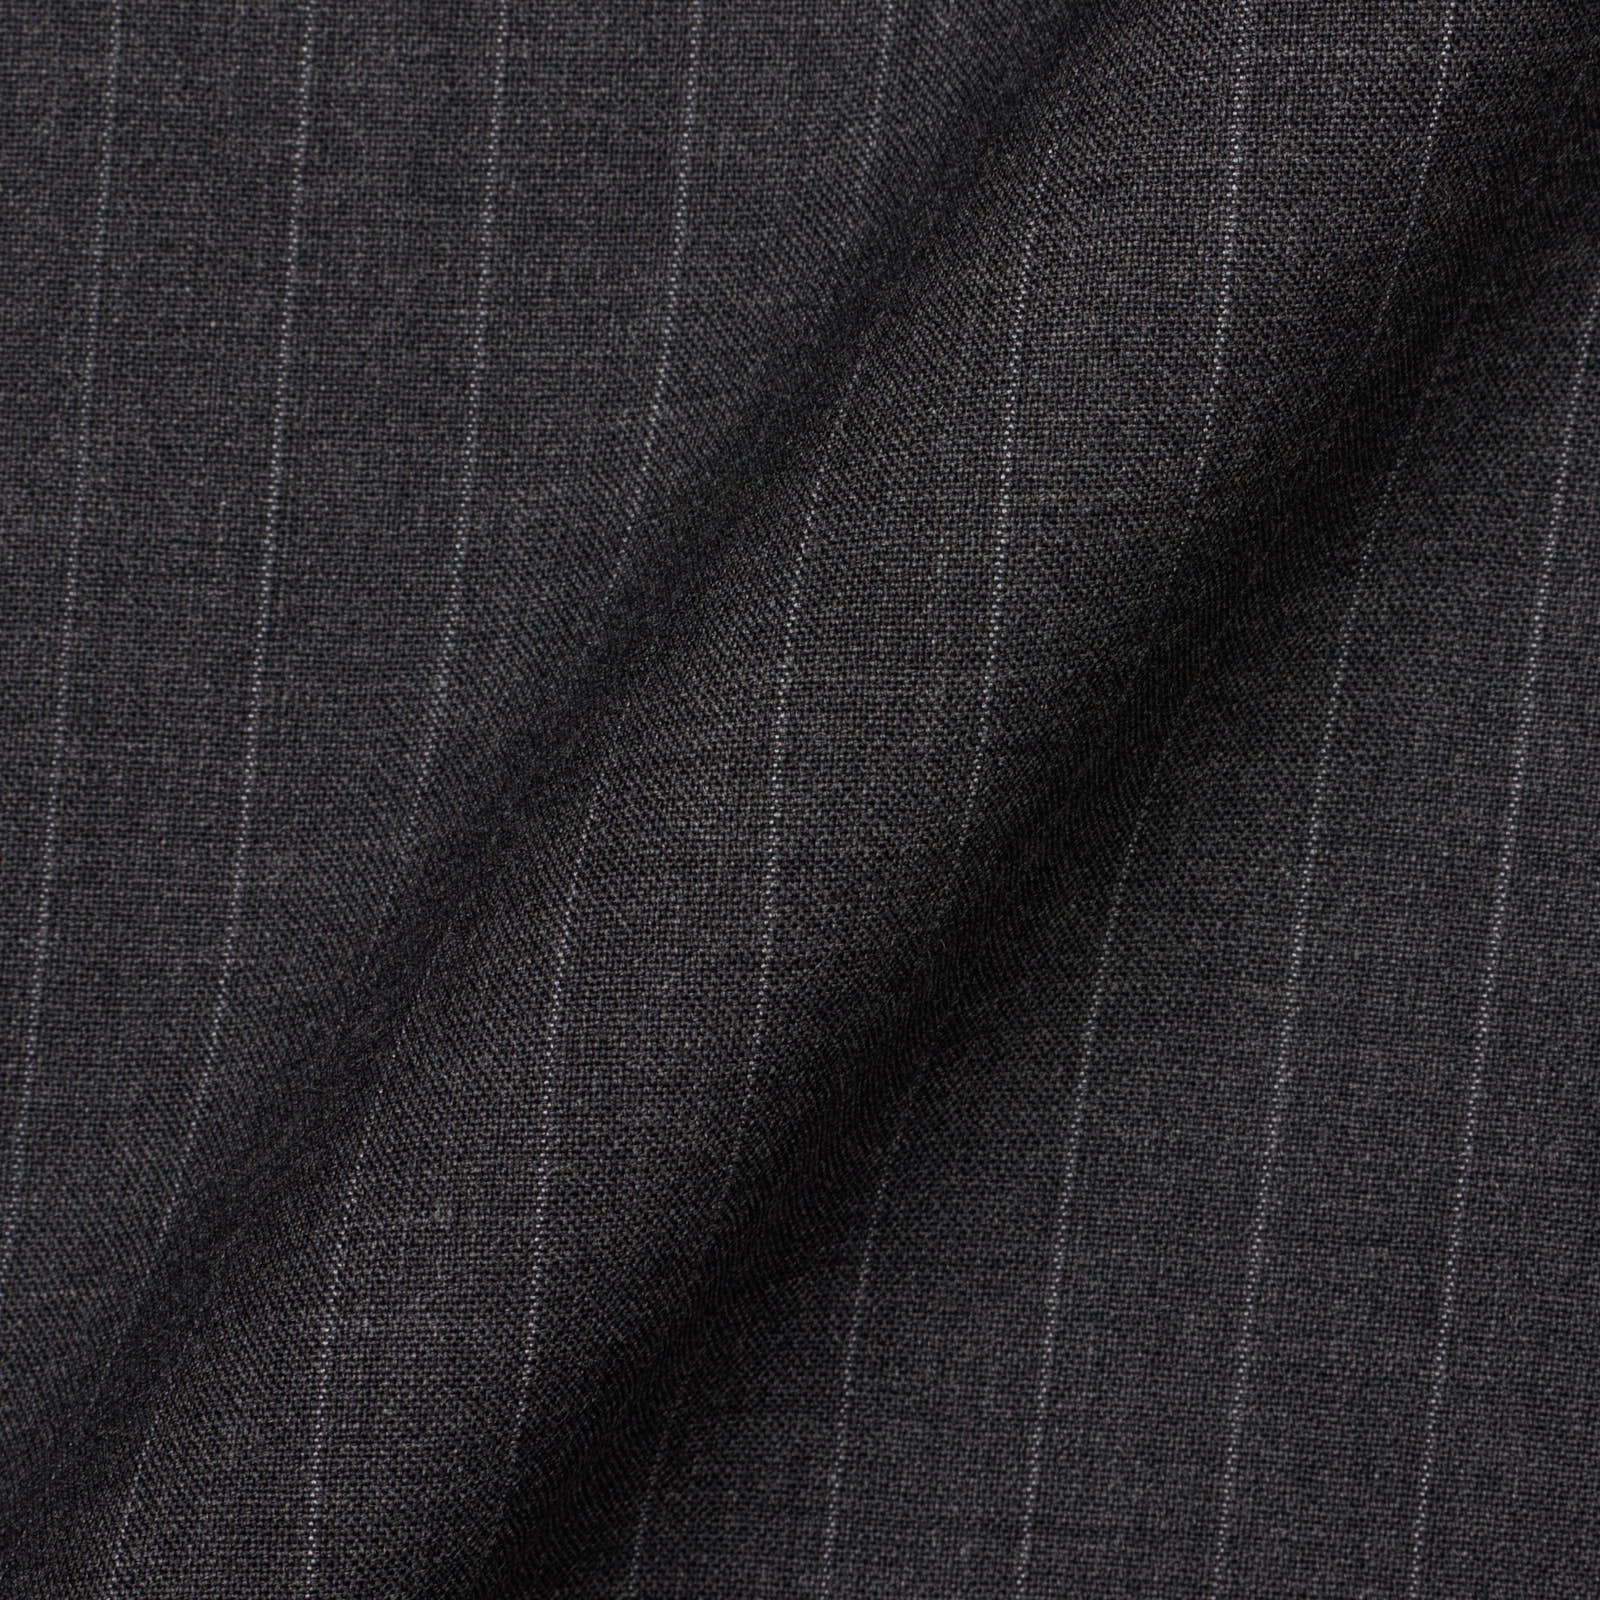 SARTORIA PARTENOPEA for VANNUCCI Gray Wool Super 130's Handmade Suit EU 54 NEW US 44